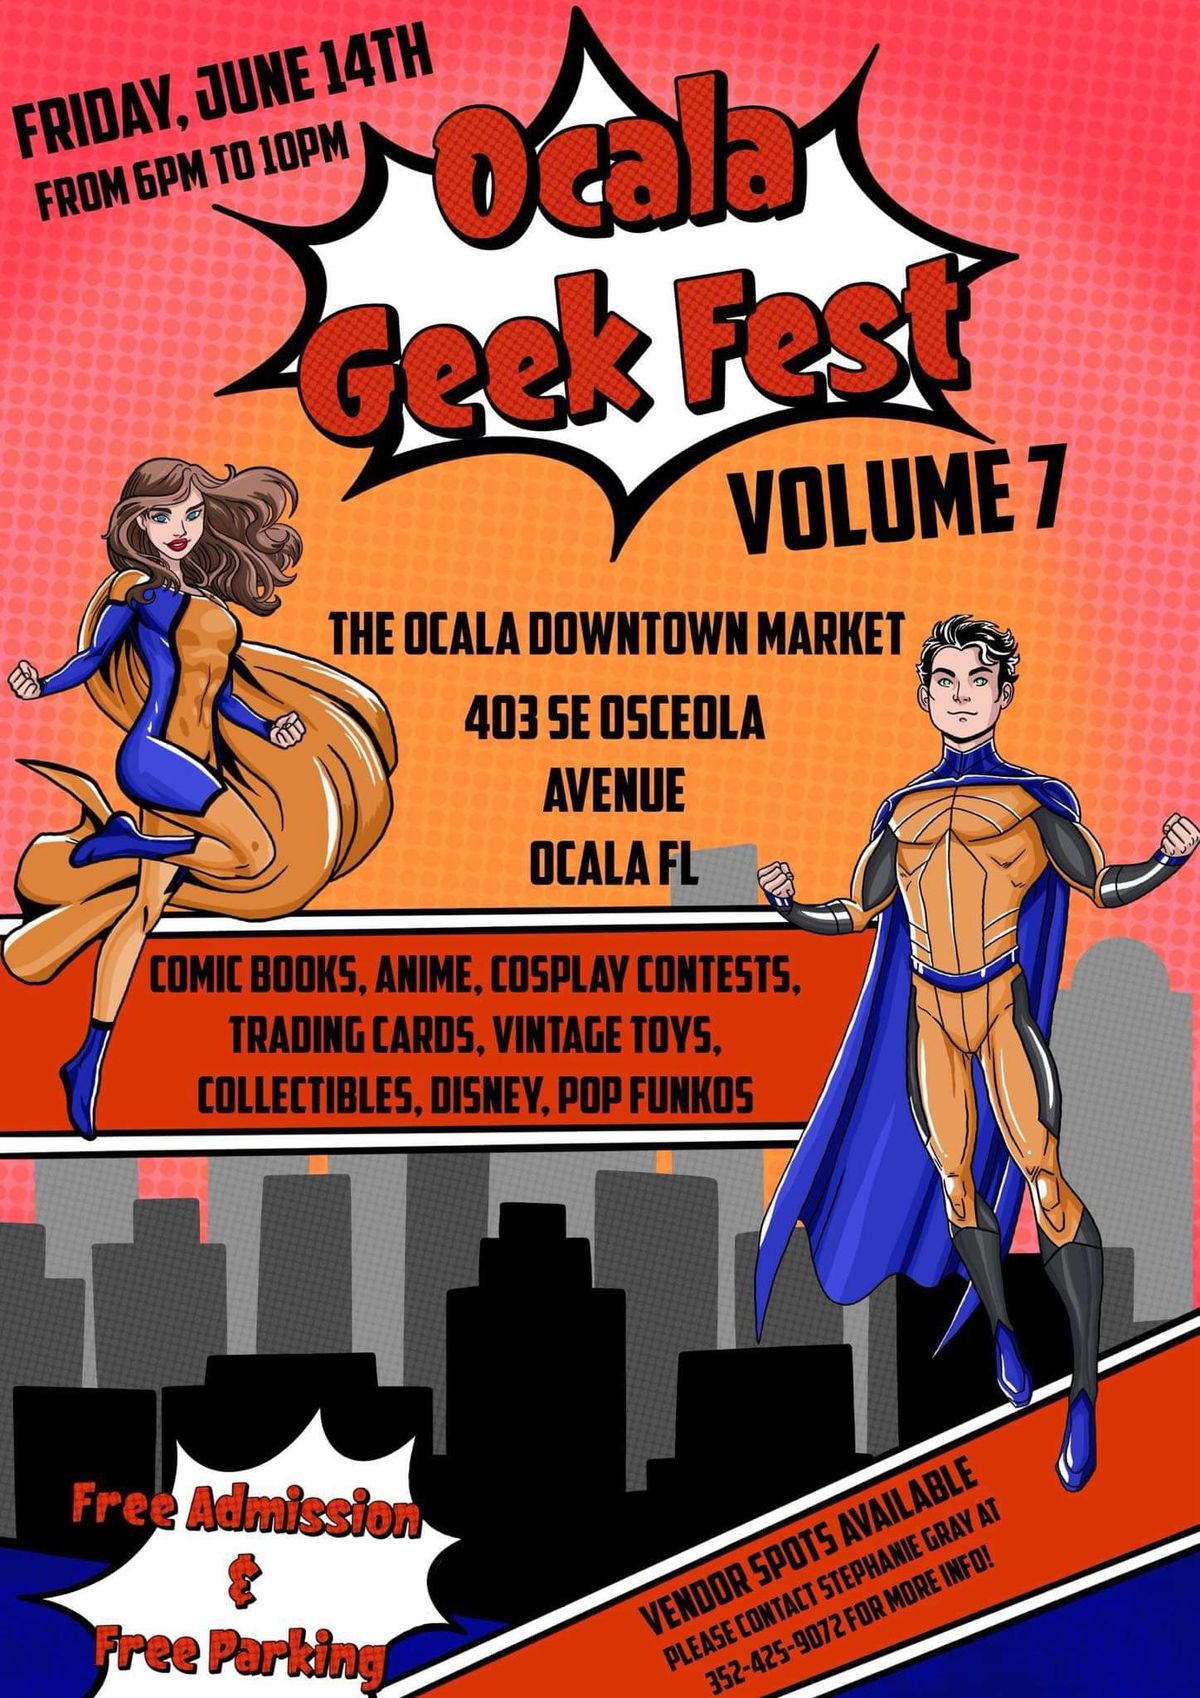 Ocala Geek Fest Volume 7